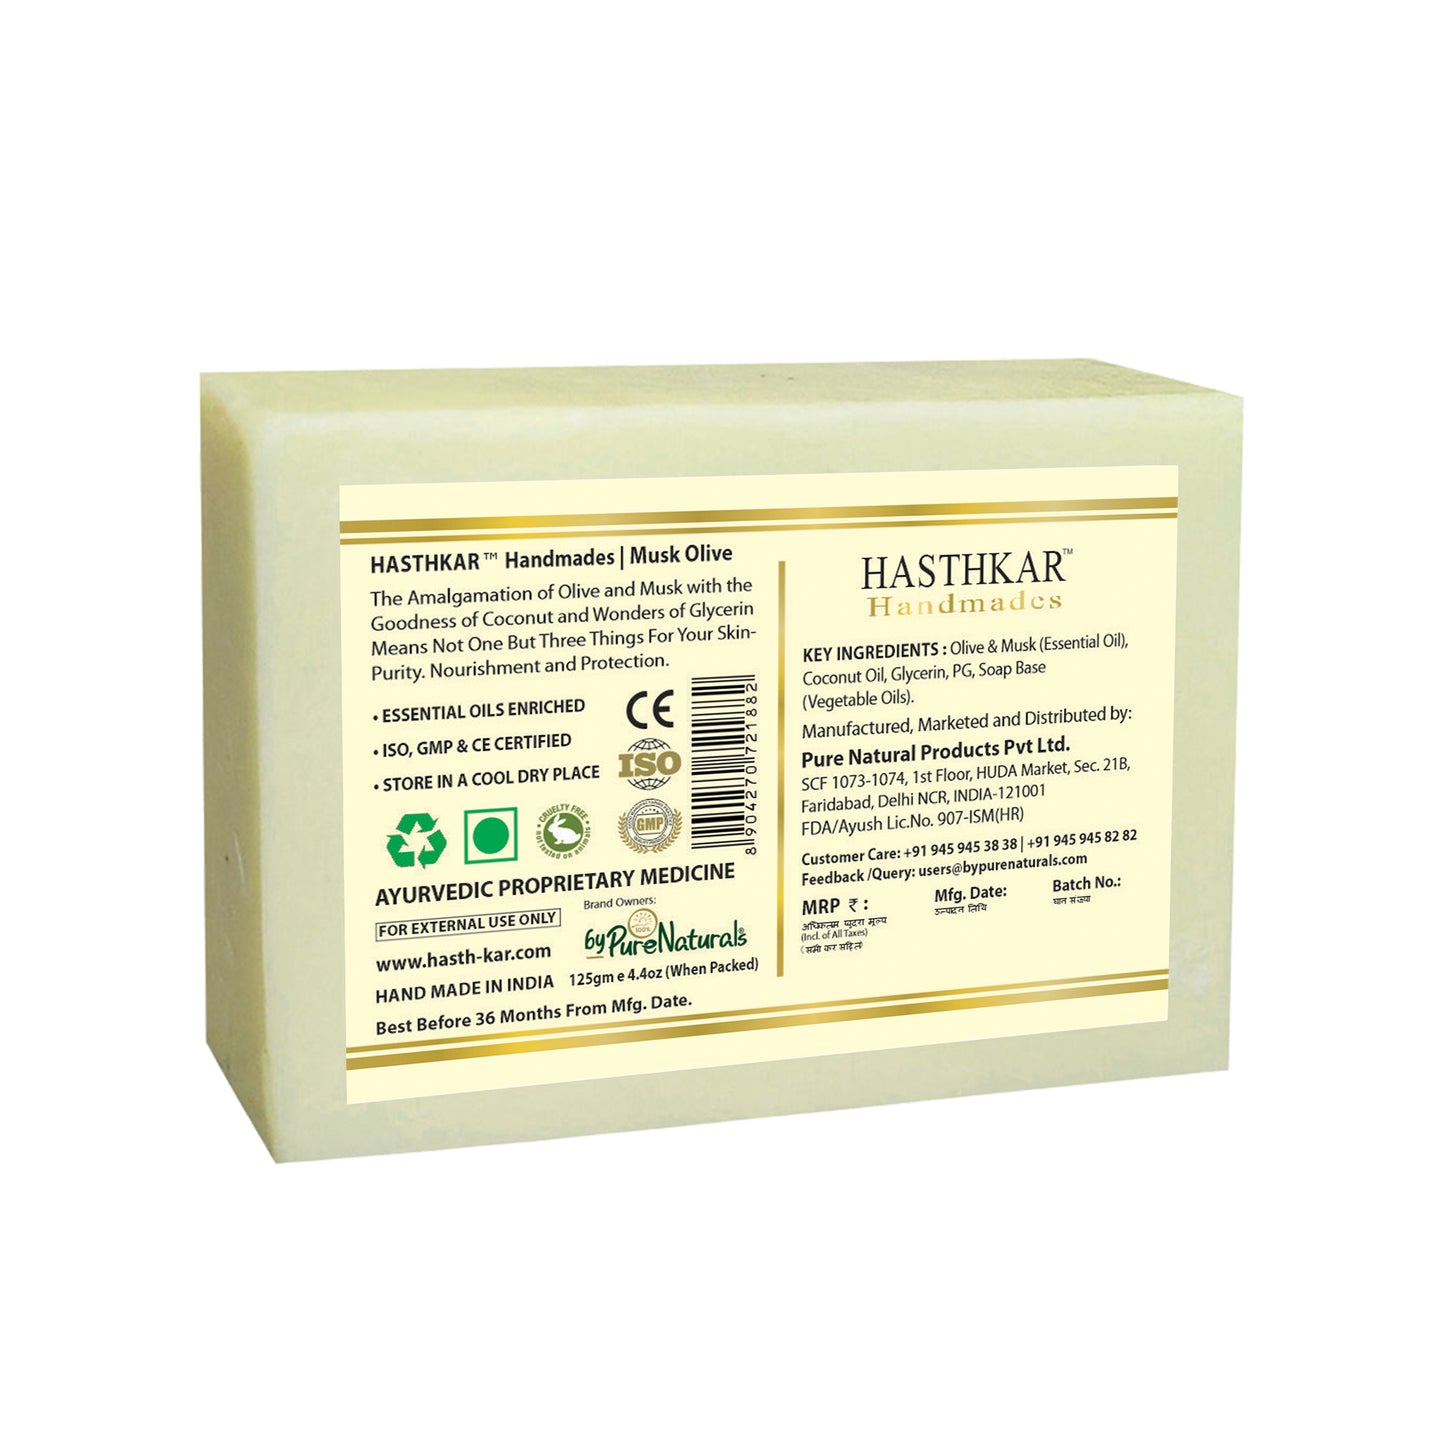 Hasthkar Handmades Glycerine Musk olive Soap 125gm Pack of 6